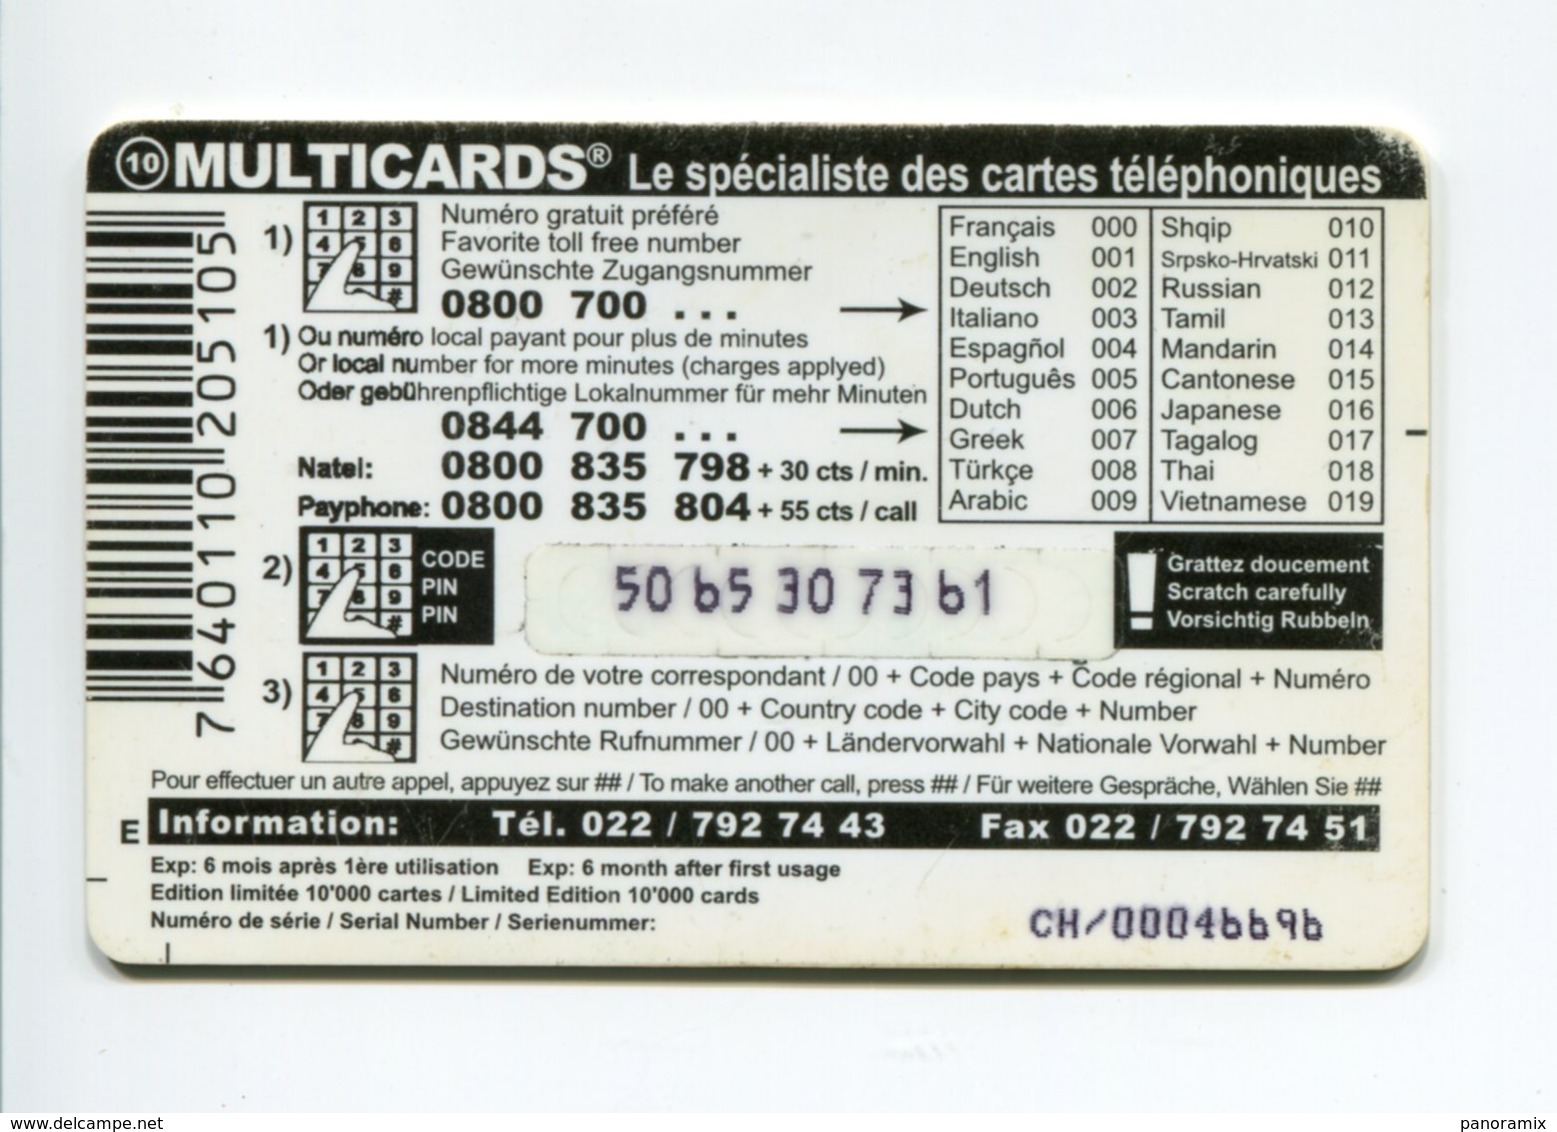 Telecarte Prépayée °_ Multicards New-Suisse-10 CHF- 10.000 Ex- R/V 73b1 - Switzerland